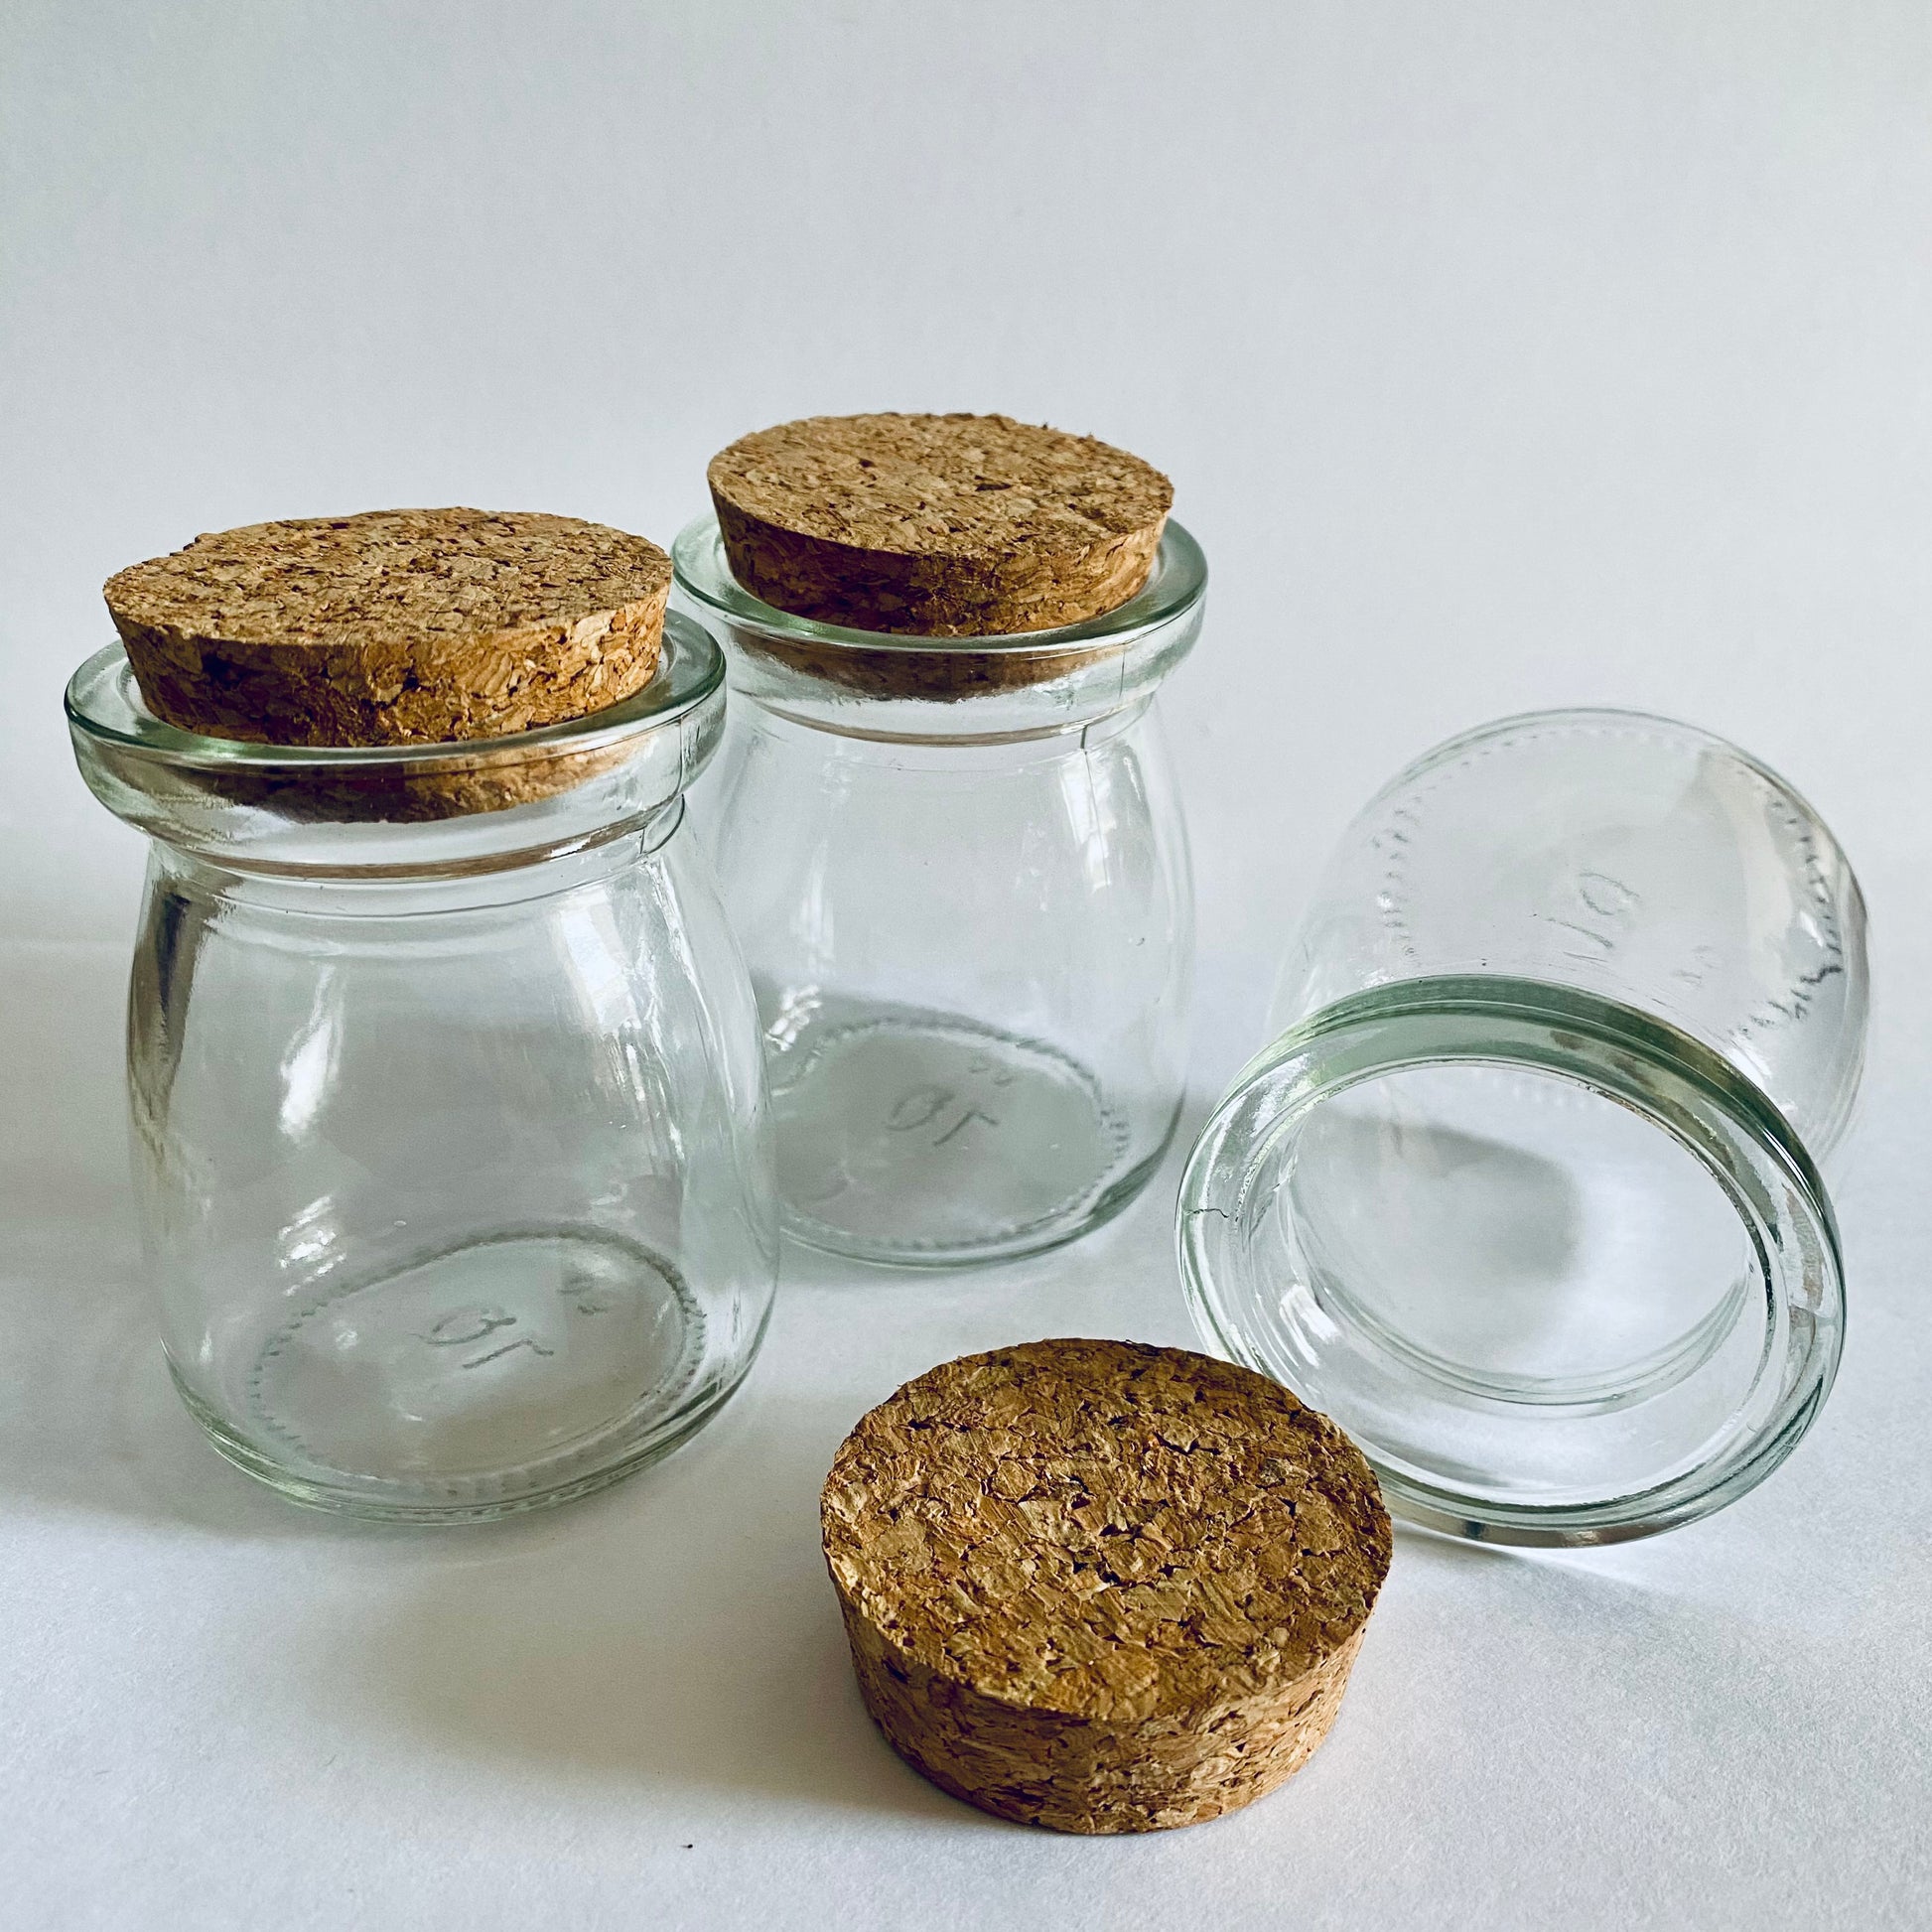 Round Spice Jar with Cork, 3.4 oz.